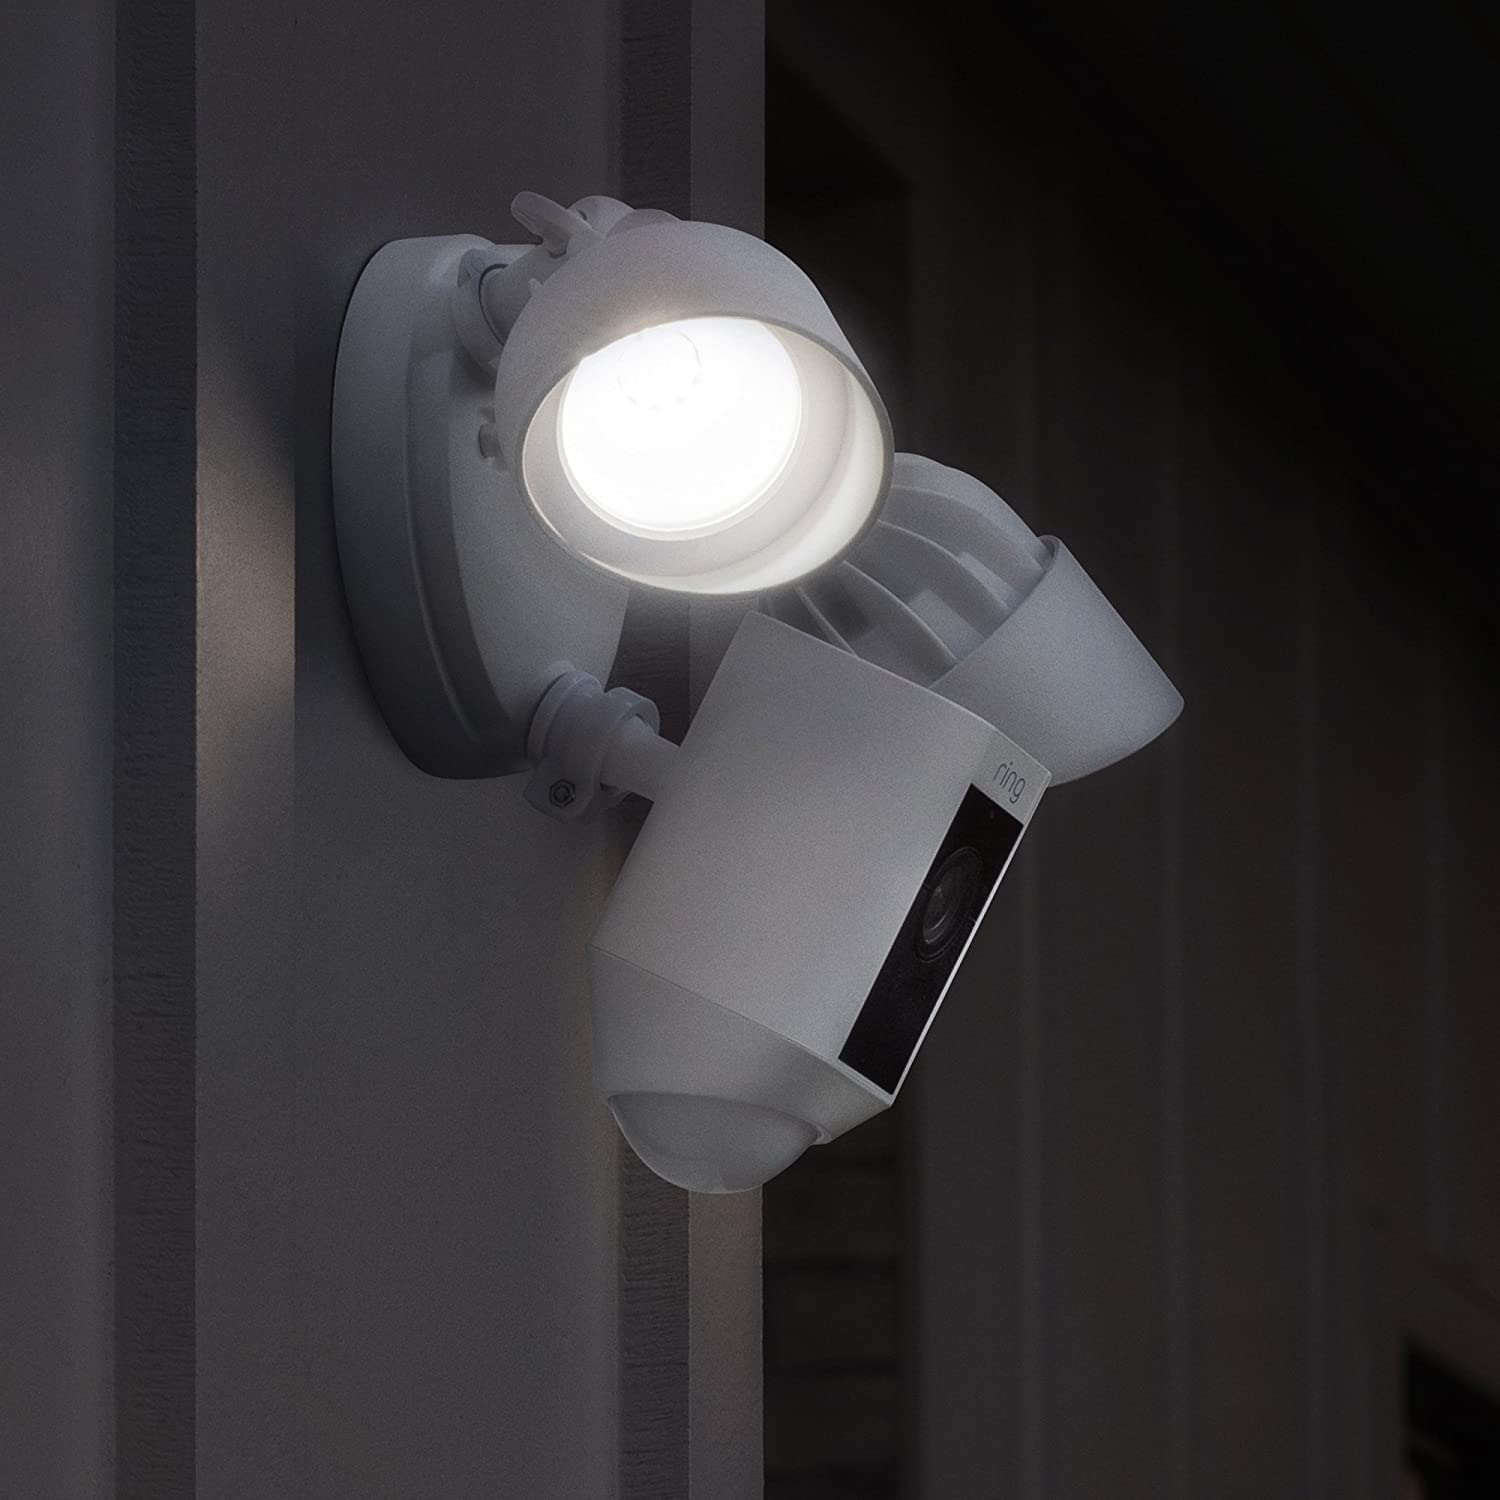 flood light security camera